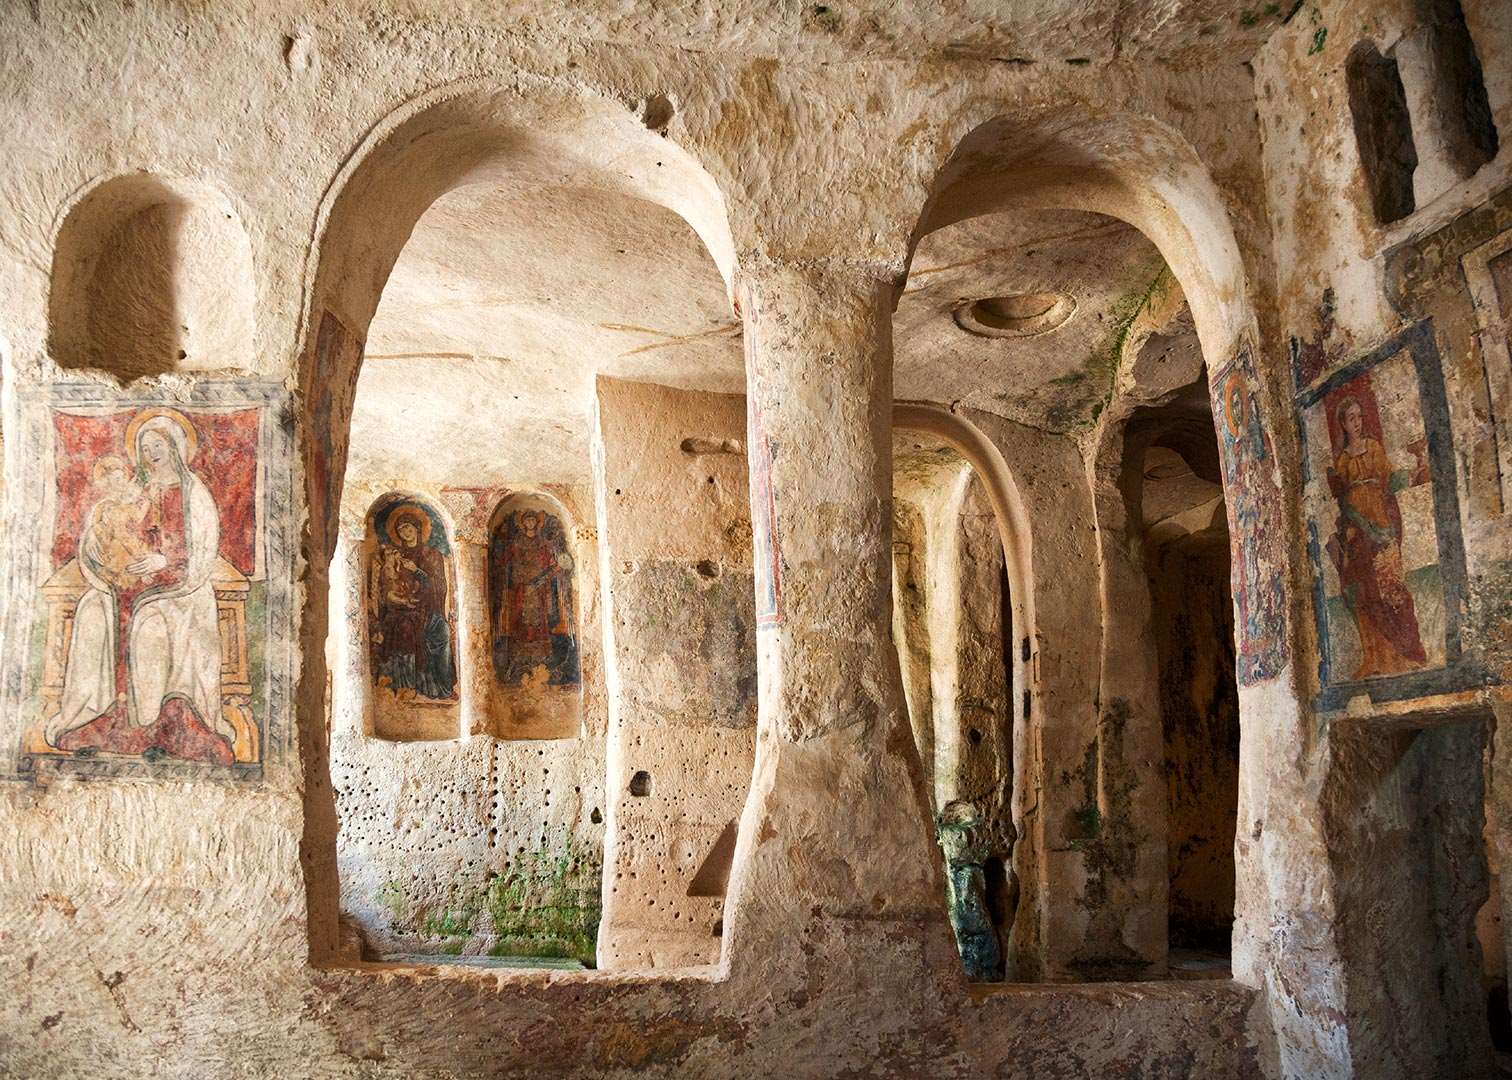  barlang templom, Matera